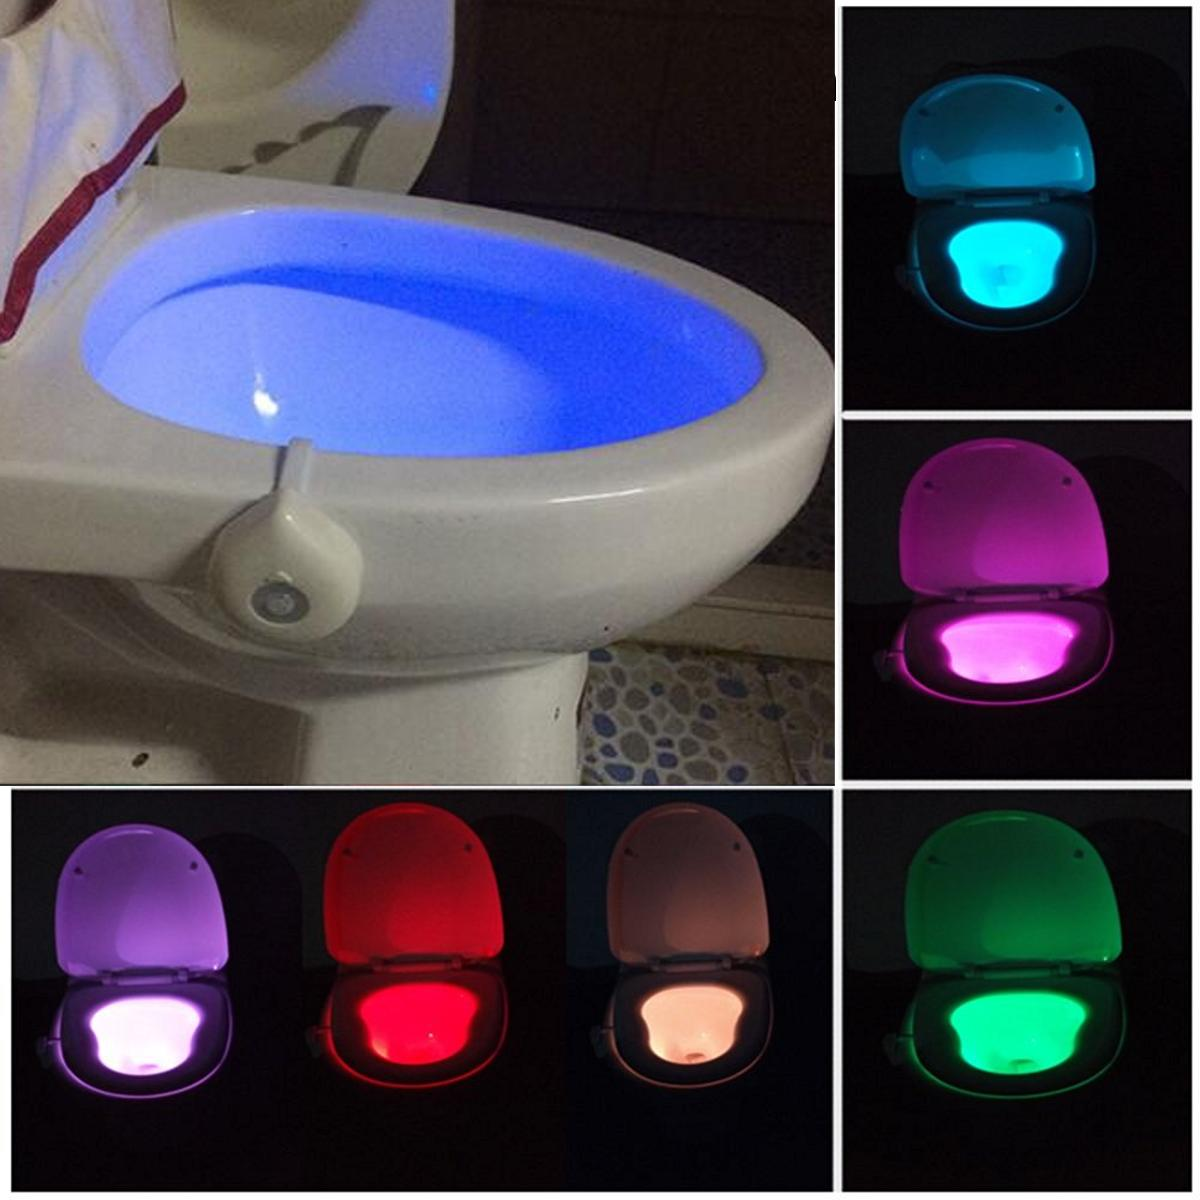 Motion Activated Toilet Night Light Bowl Bathroom Led 8 Color Lamp Sensor Lights Sale Banggood Usa Sold Out Arrival Notice Arrival Notice